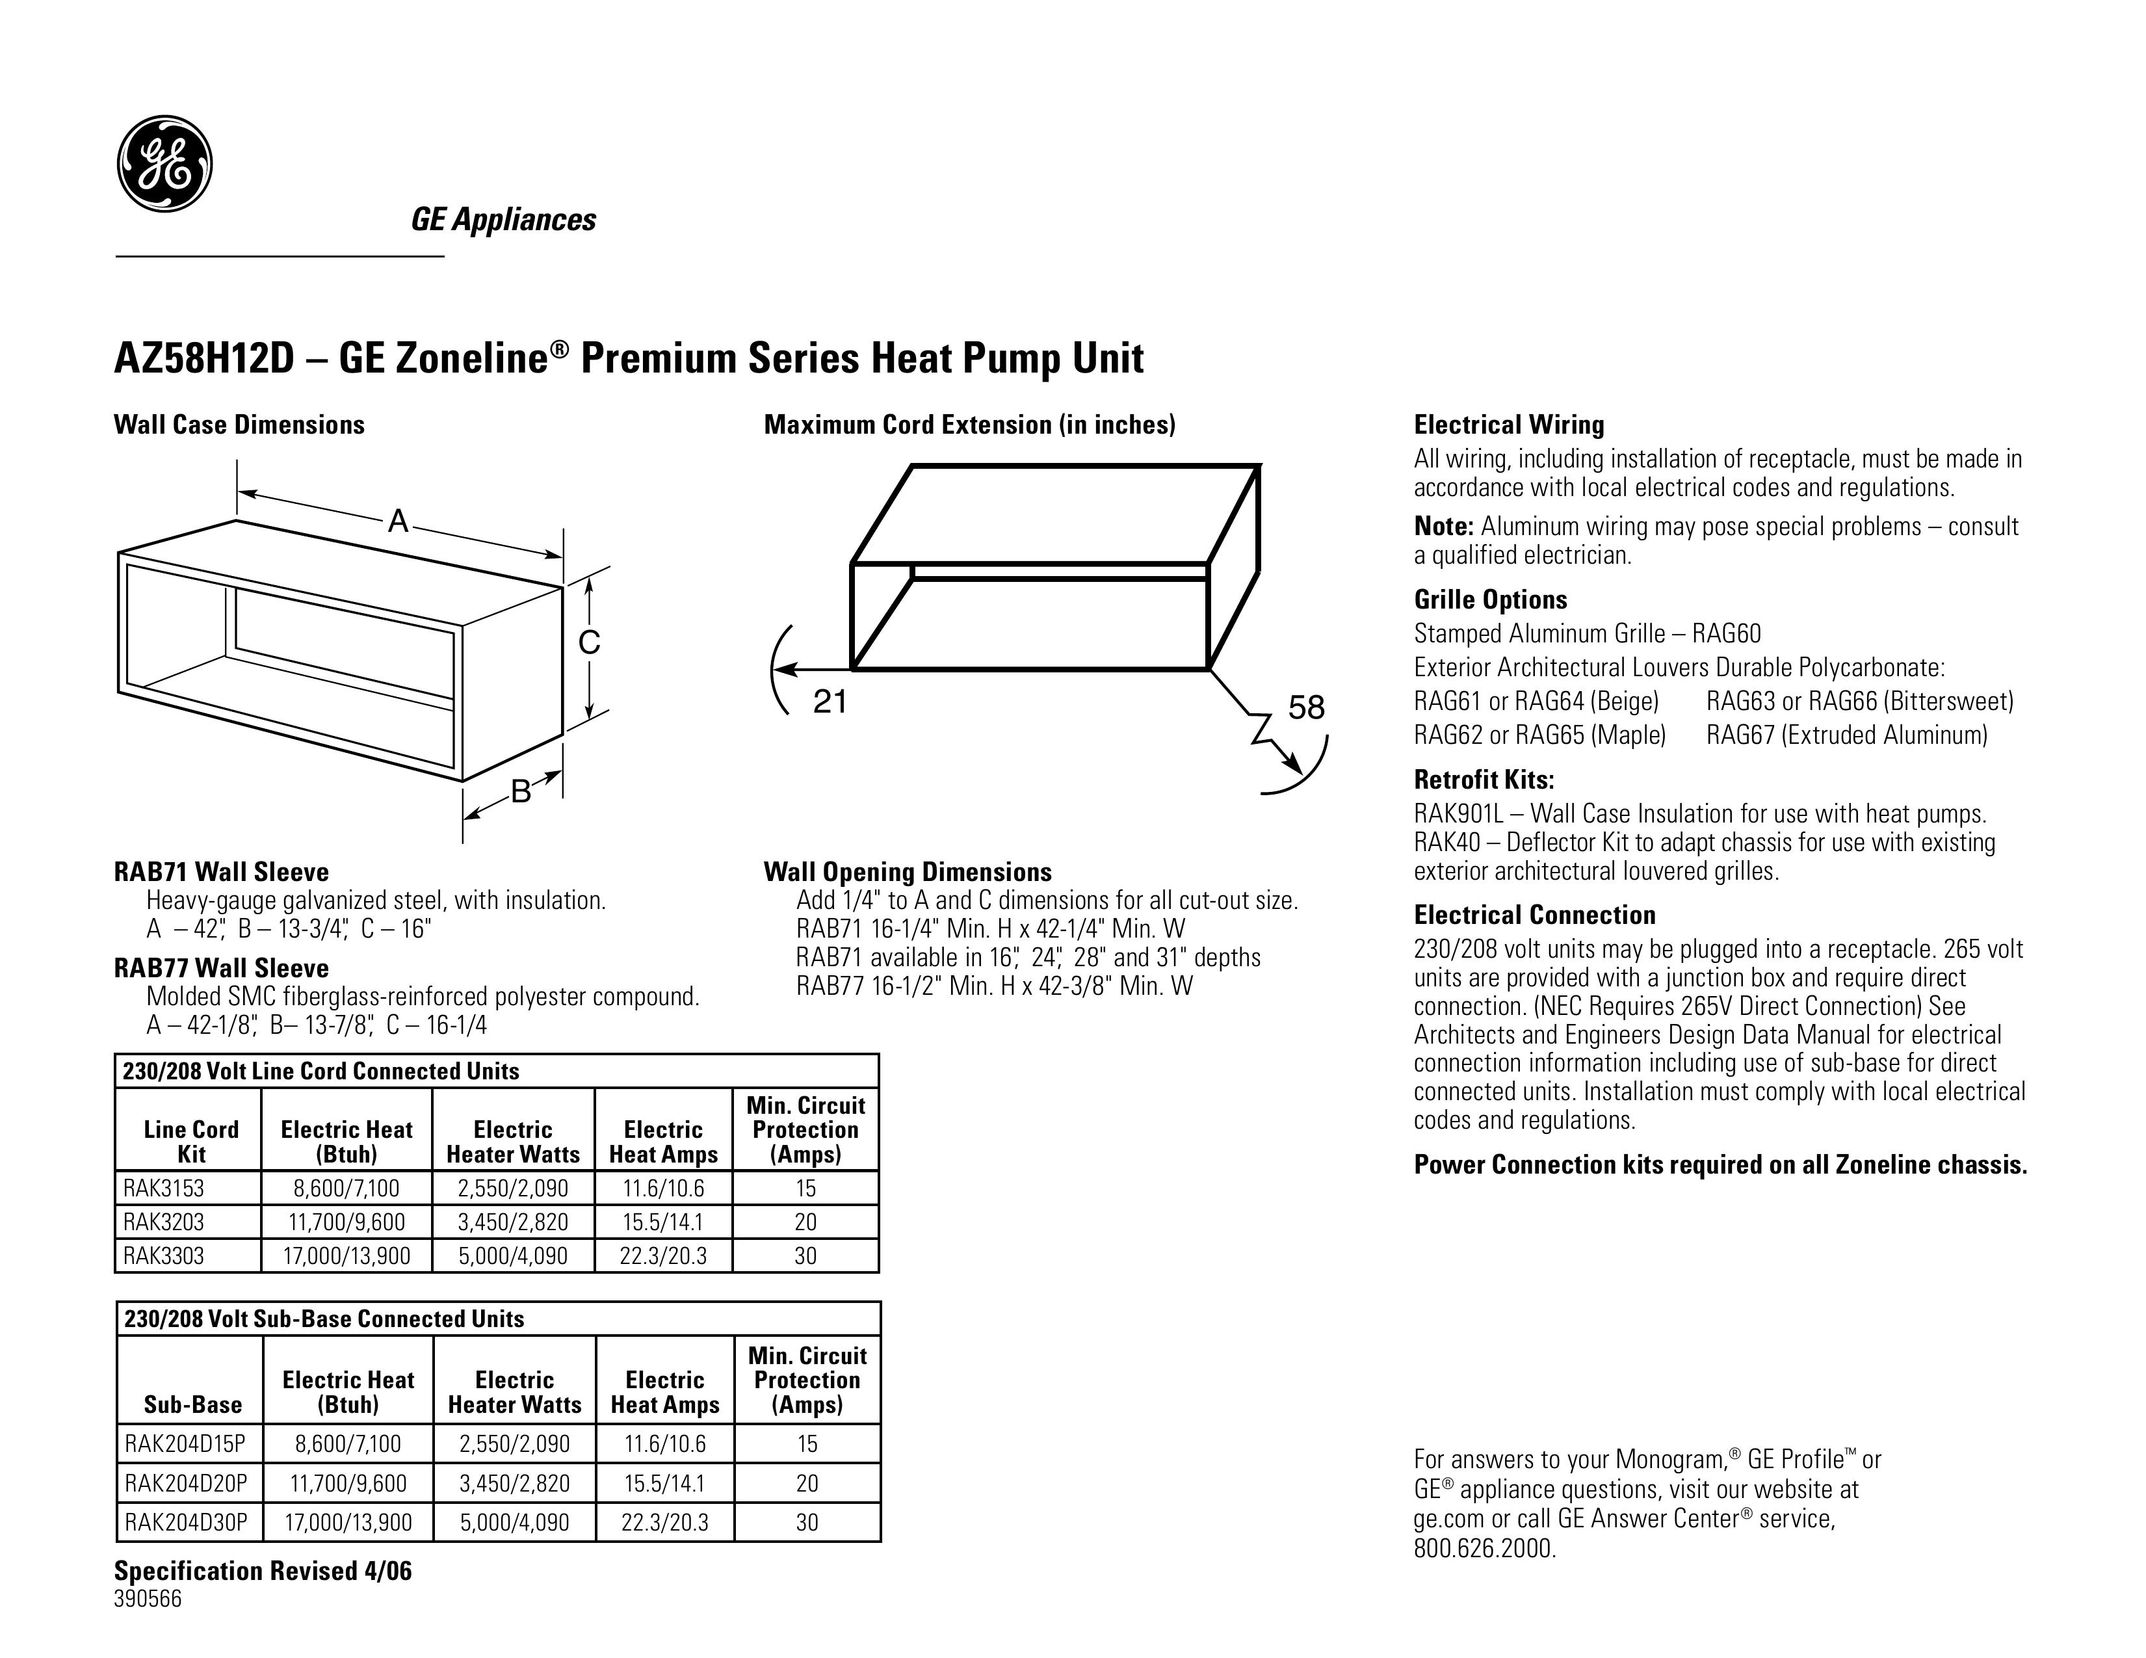 GE AZ58H12D Heat Pump User Manual